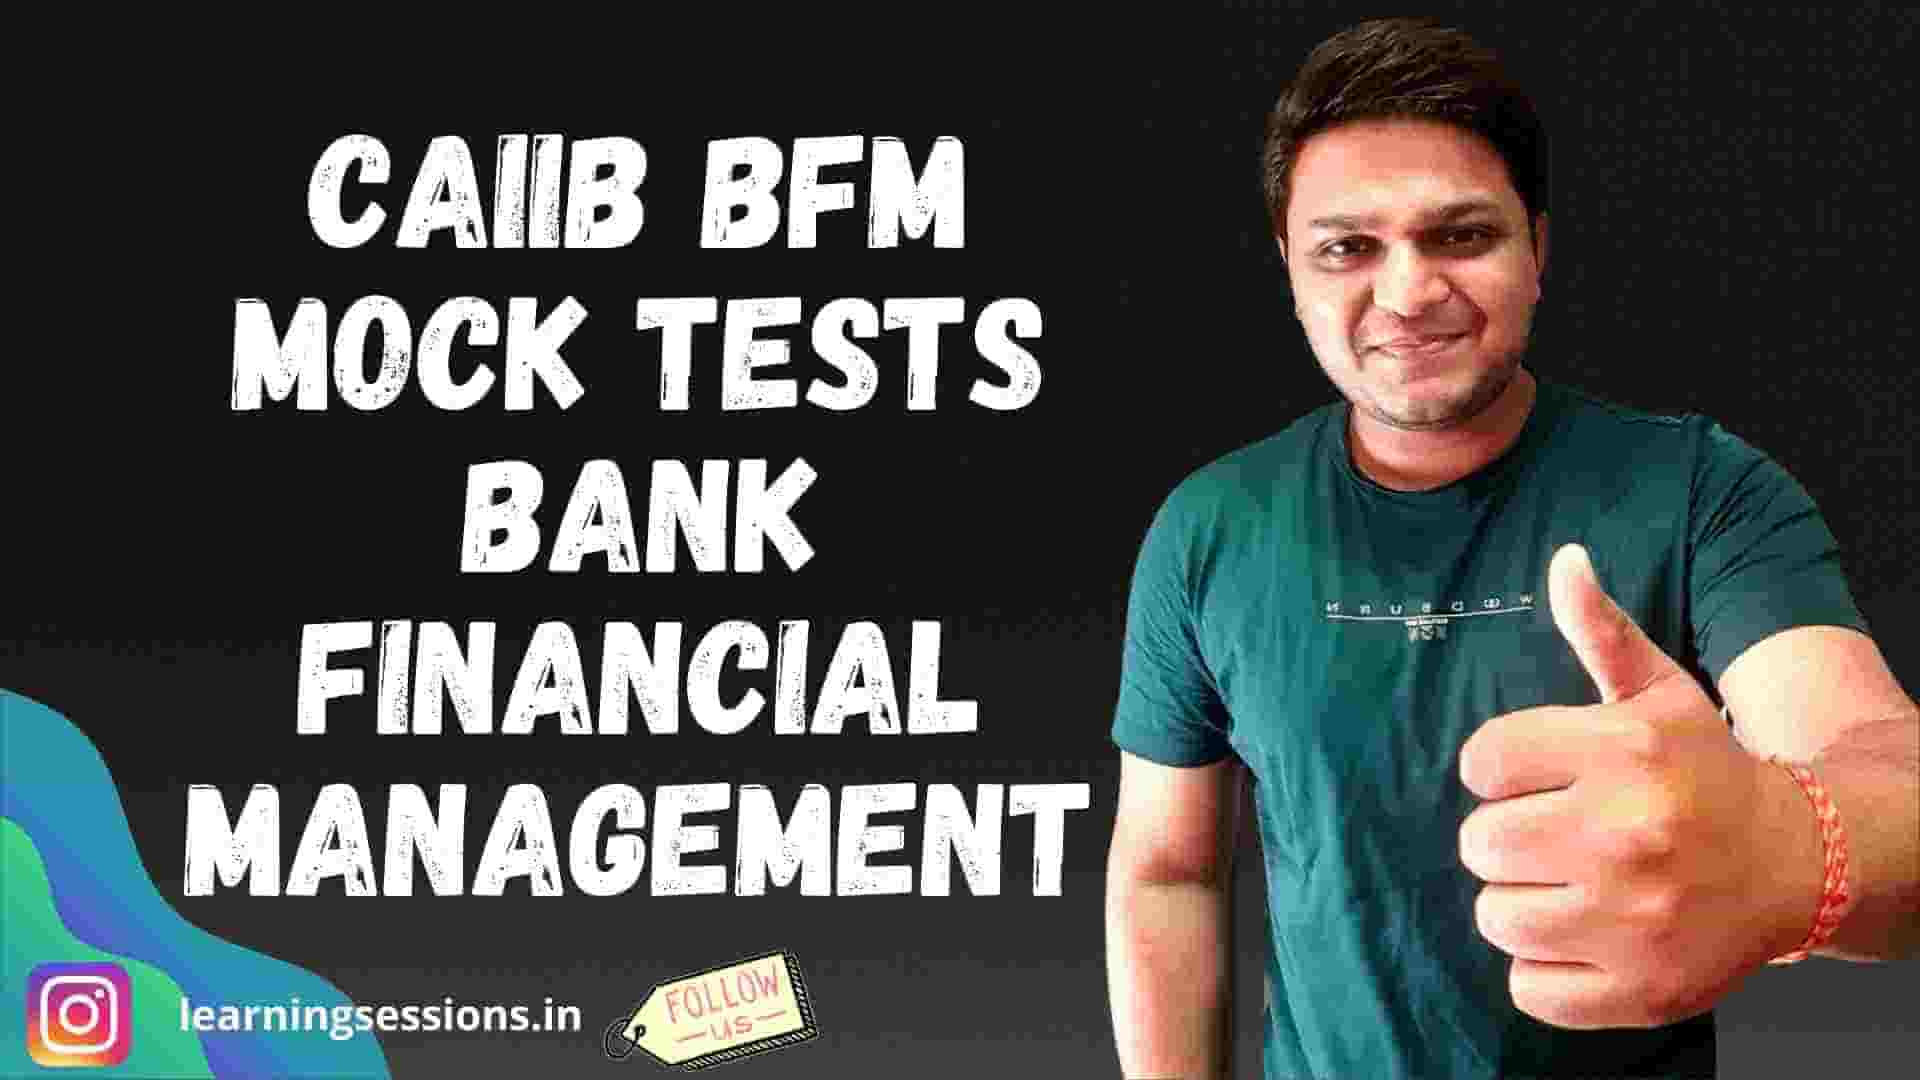 CAIIB BFM MOCK TESTS - BANK FINANCIAL MANAGEMENT